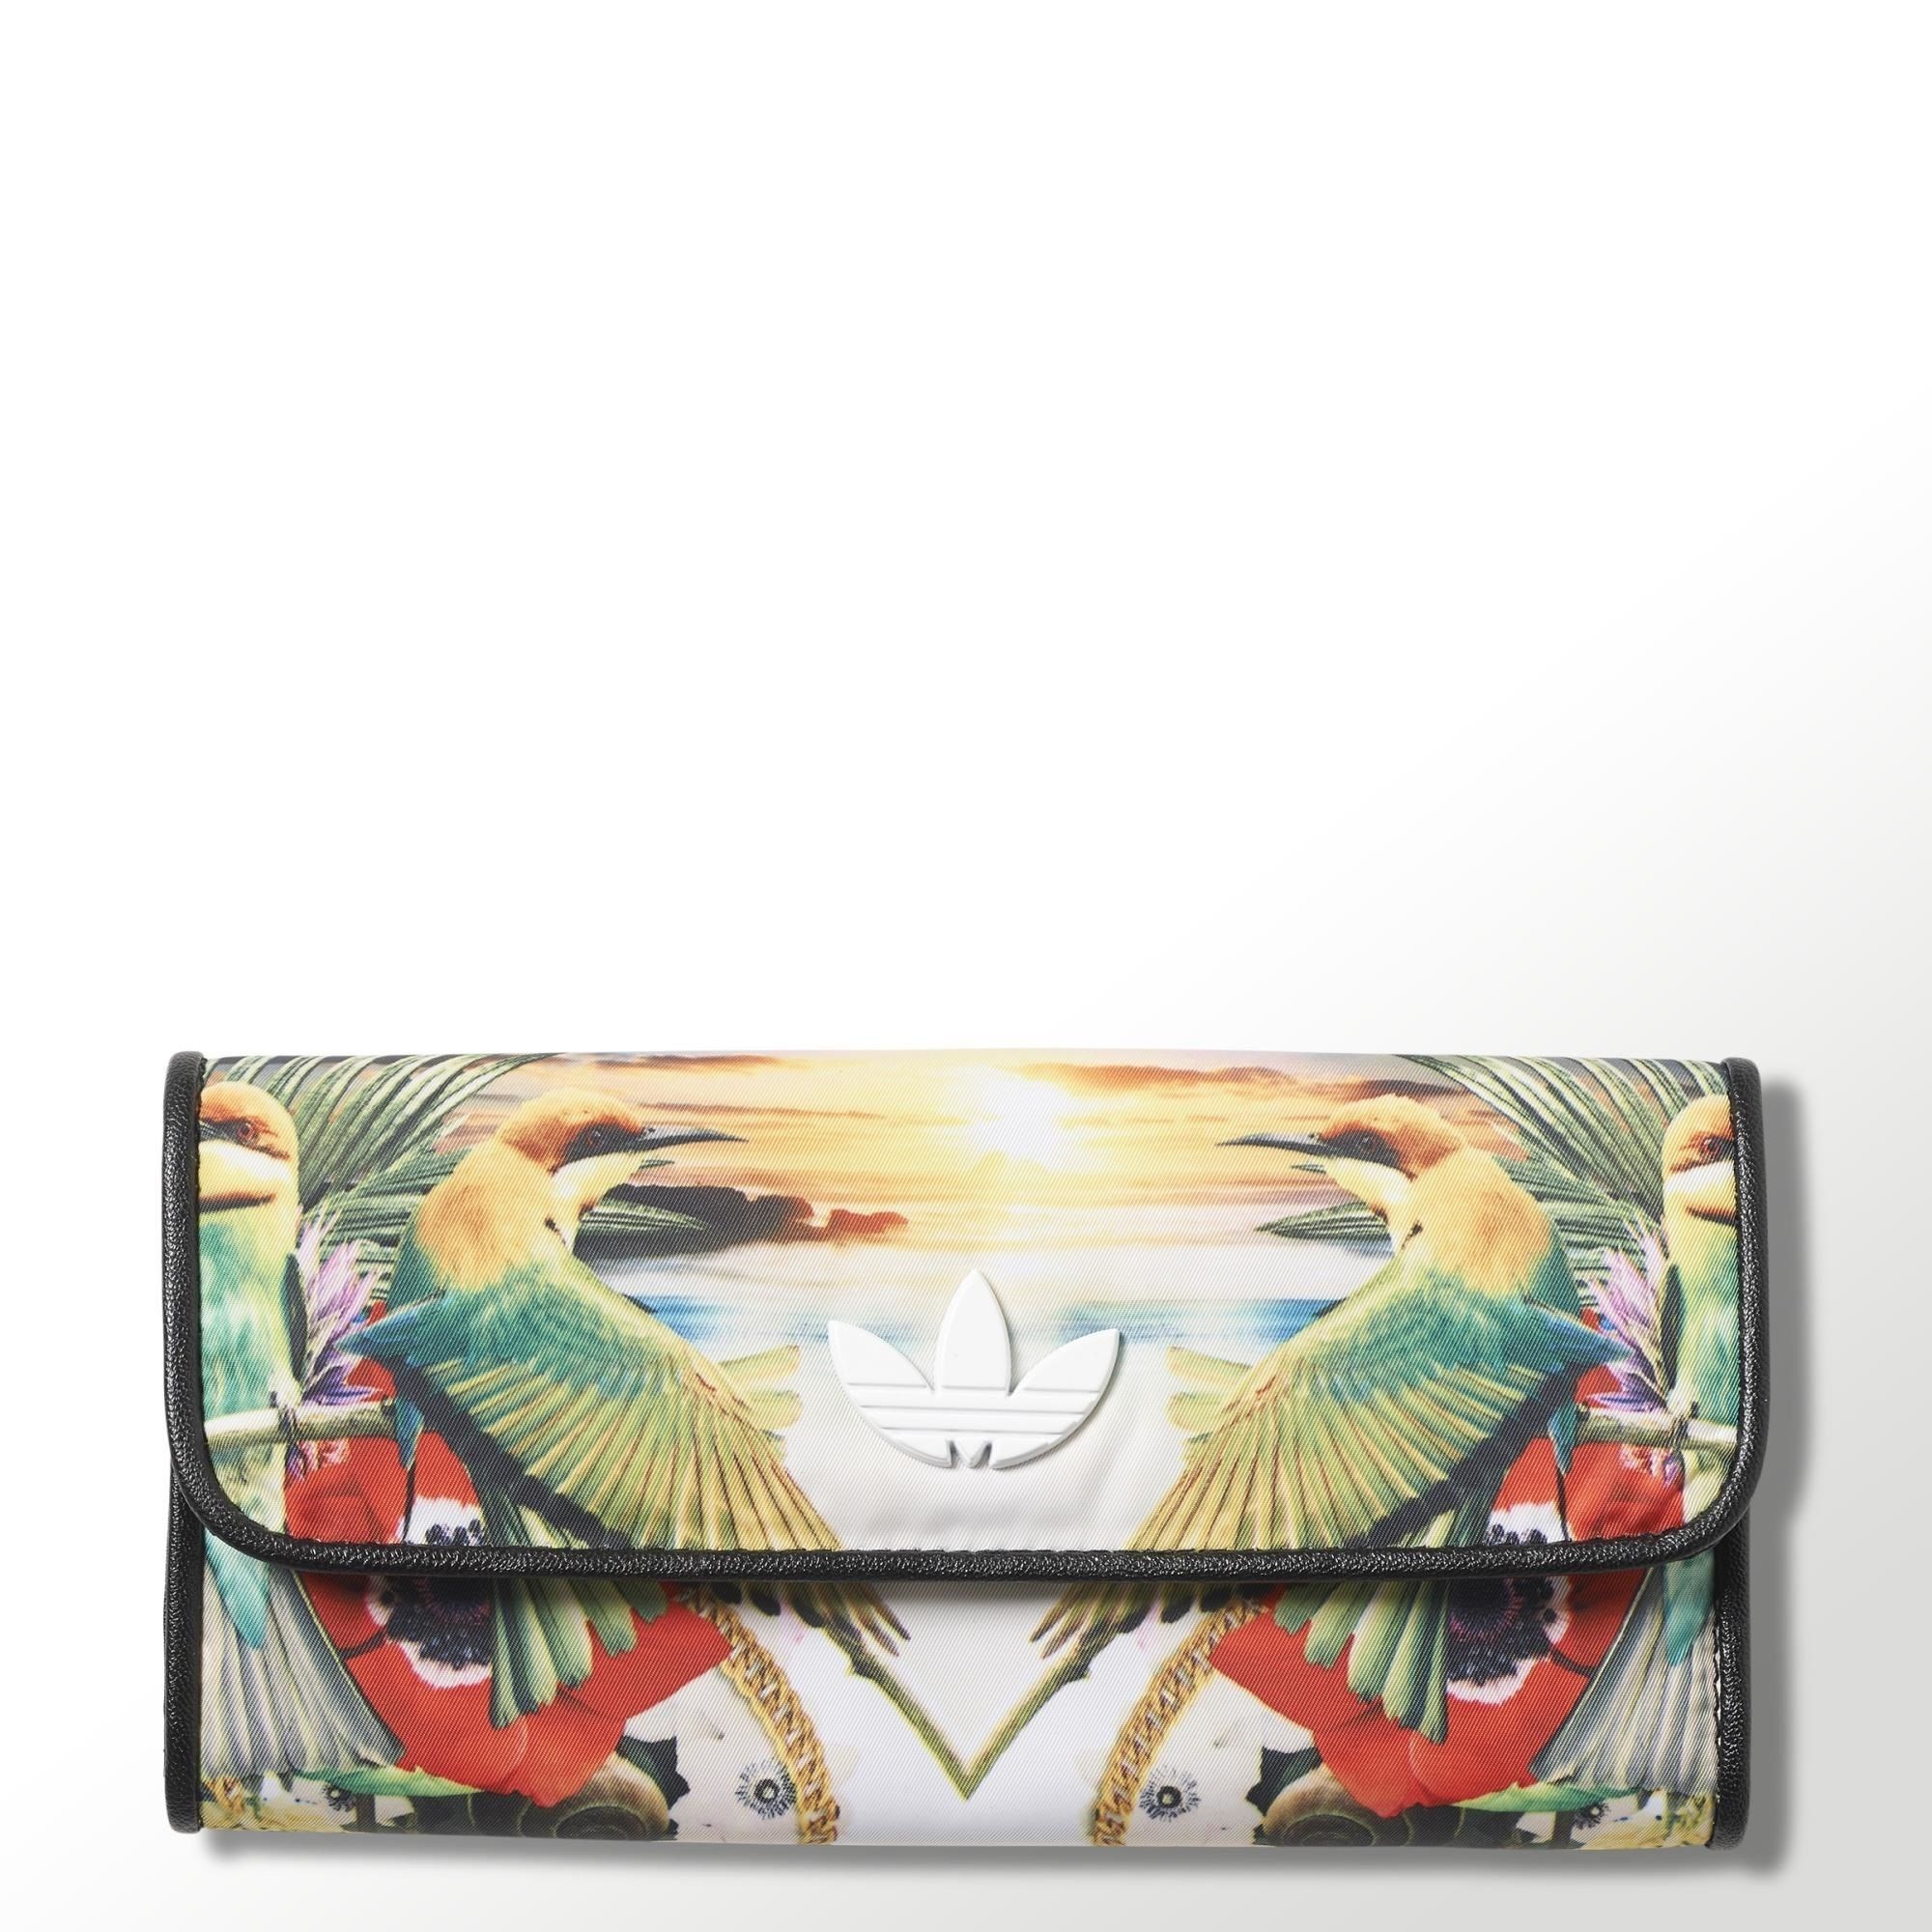 adidas Wallet Flower Graphic Bayan Cüzdan Ürün kodu: S20023 | Etichet Sport